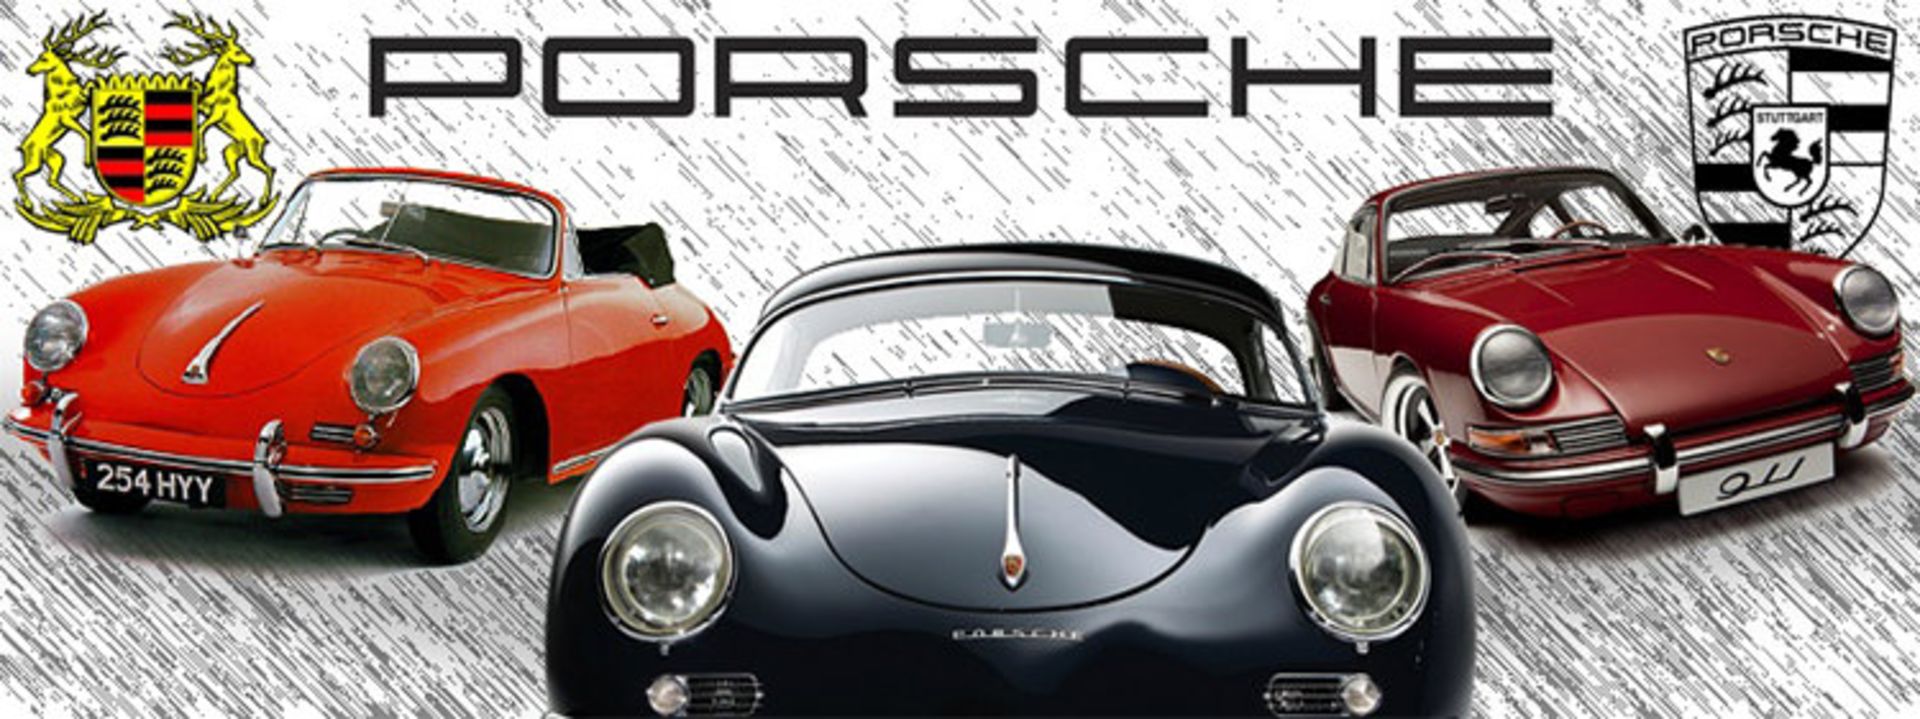 پورشه / Porsche